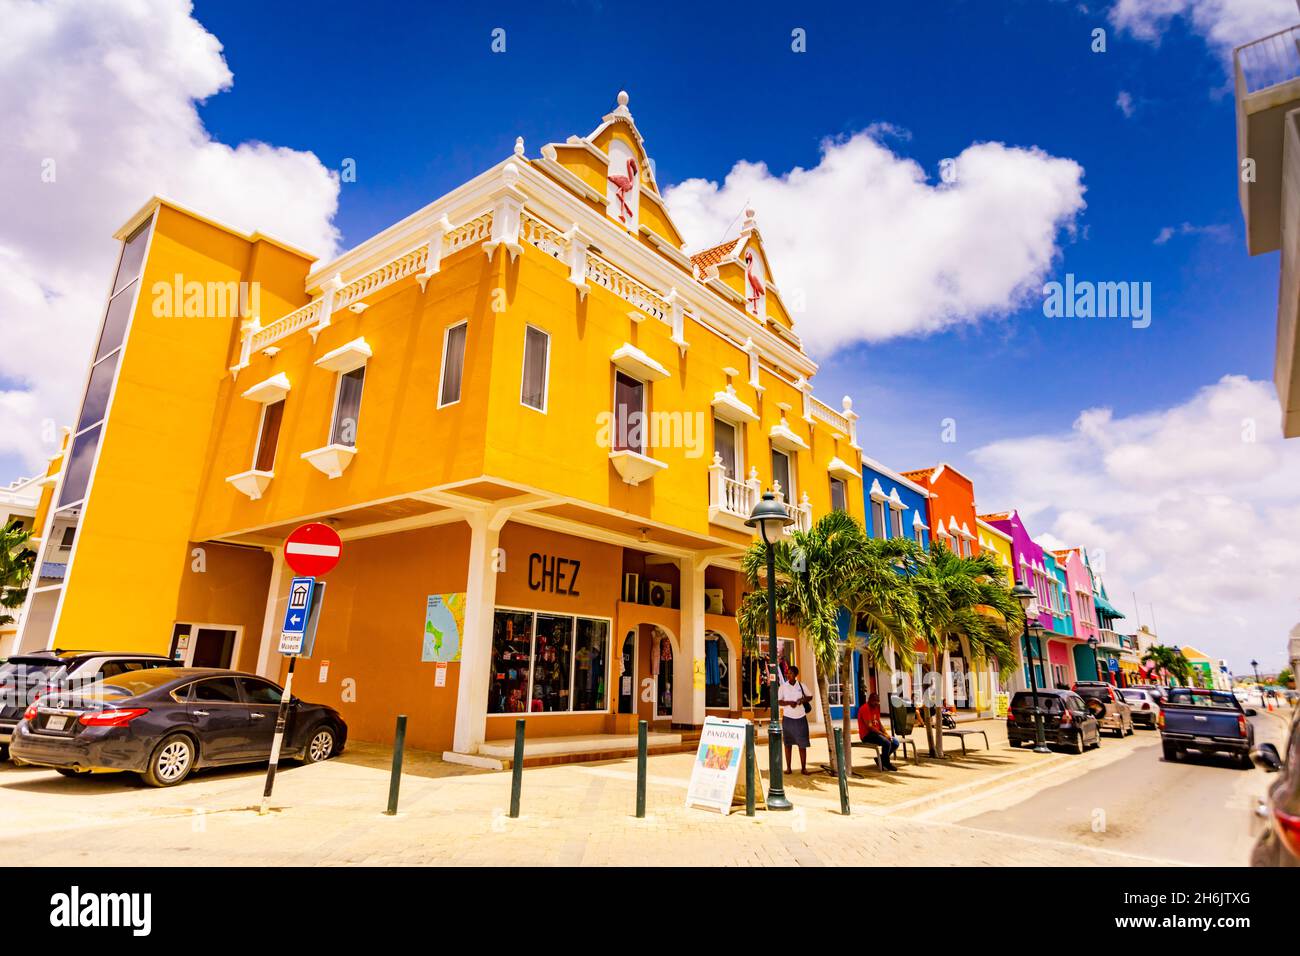 The beautiful colorful buildings in downtown Kralendijk, Bonaire, Netherlands Antilles, Caribbean, Central America Stock Photo